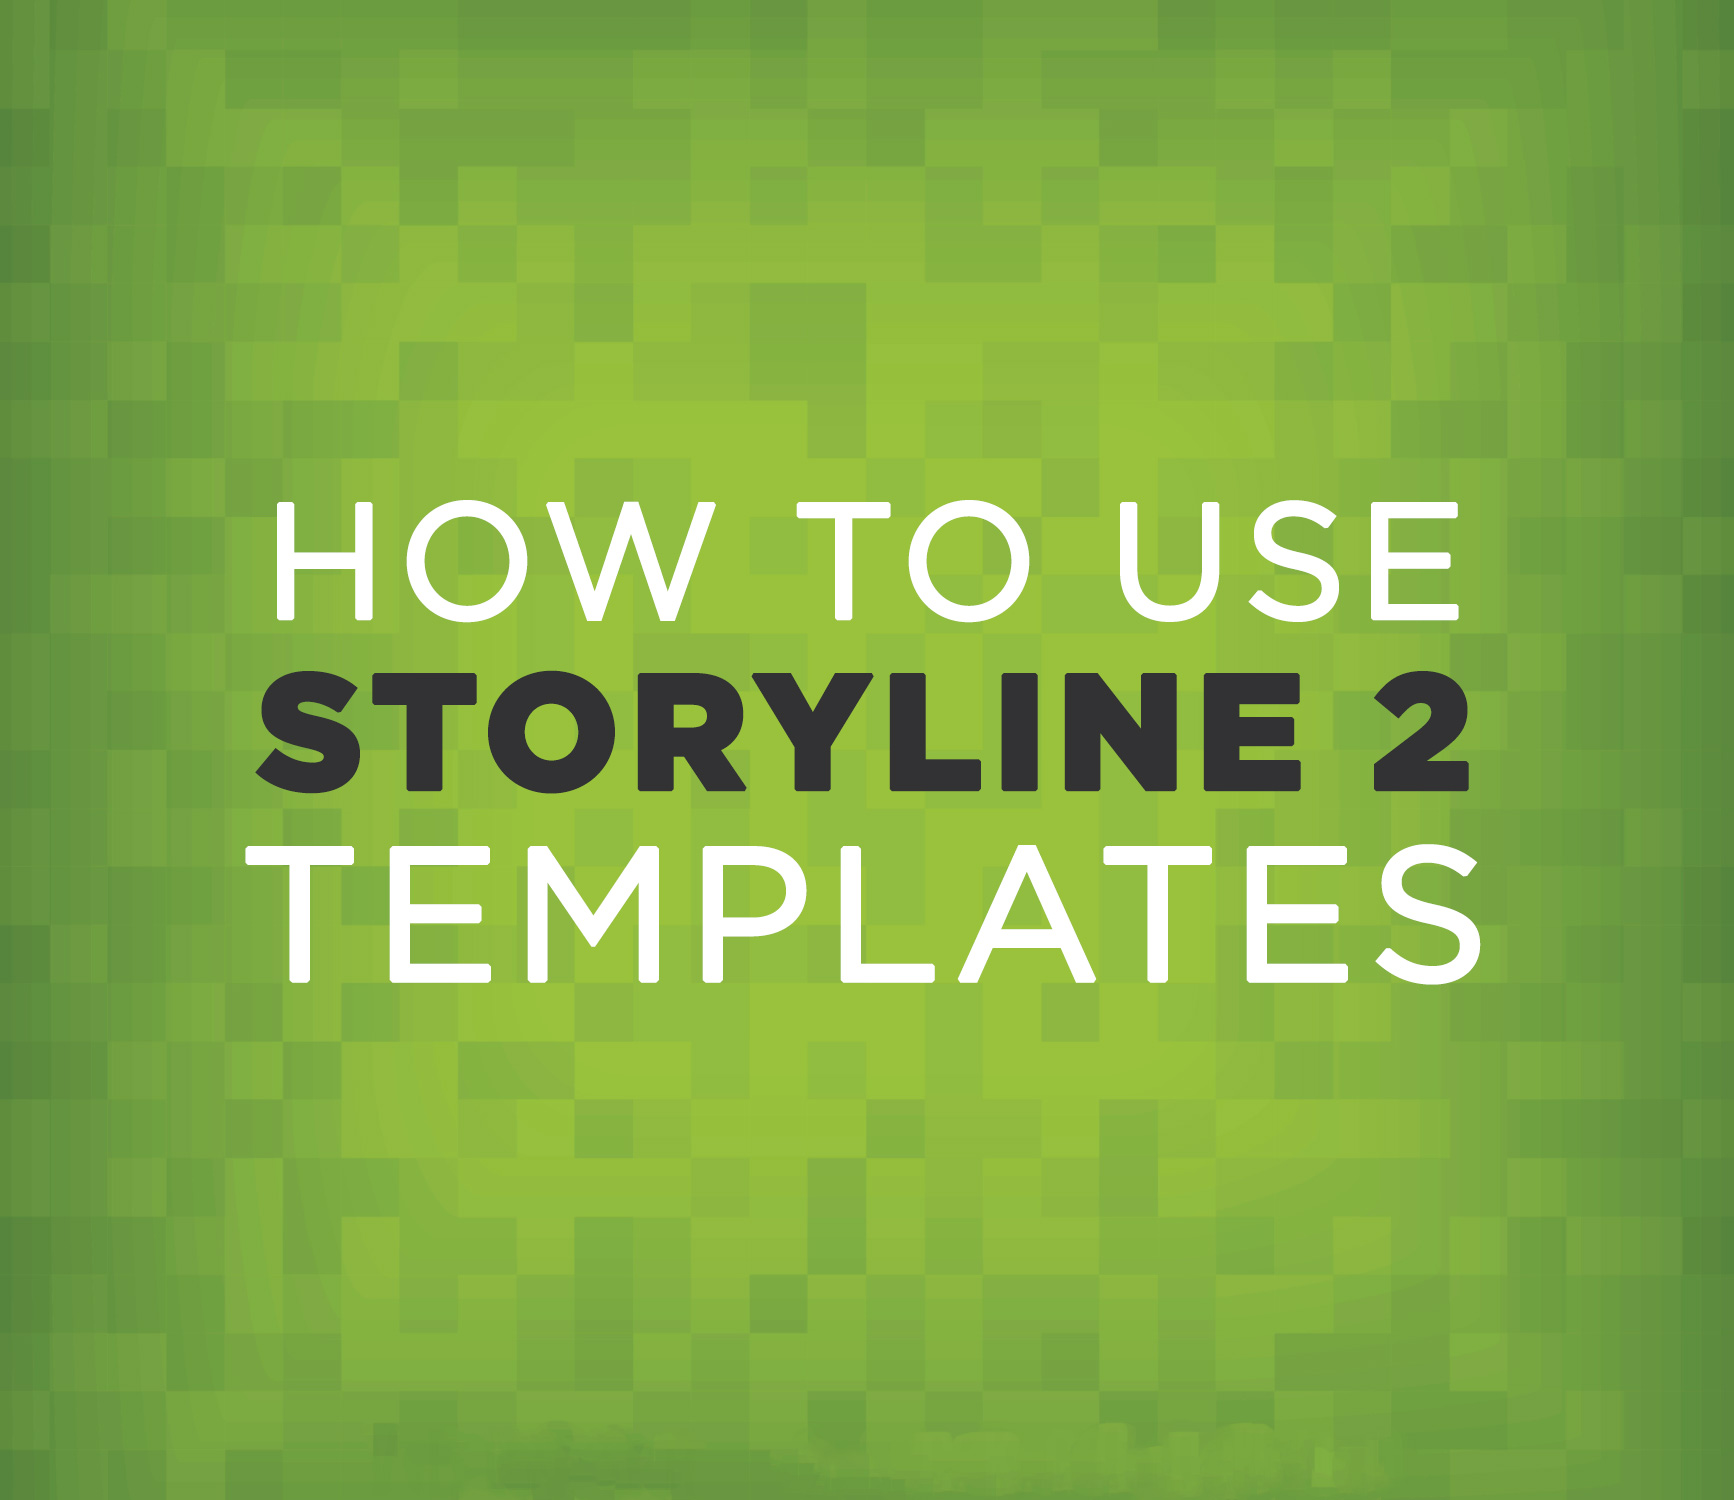 Storyline 2 Templates Free